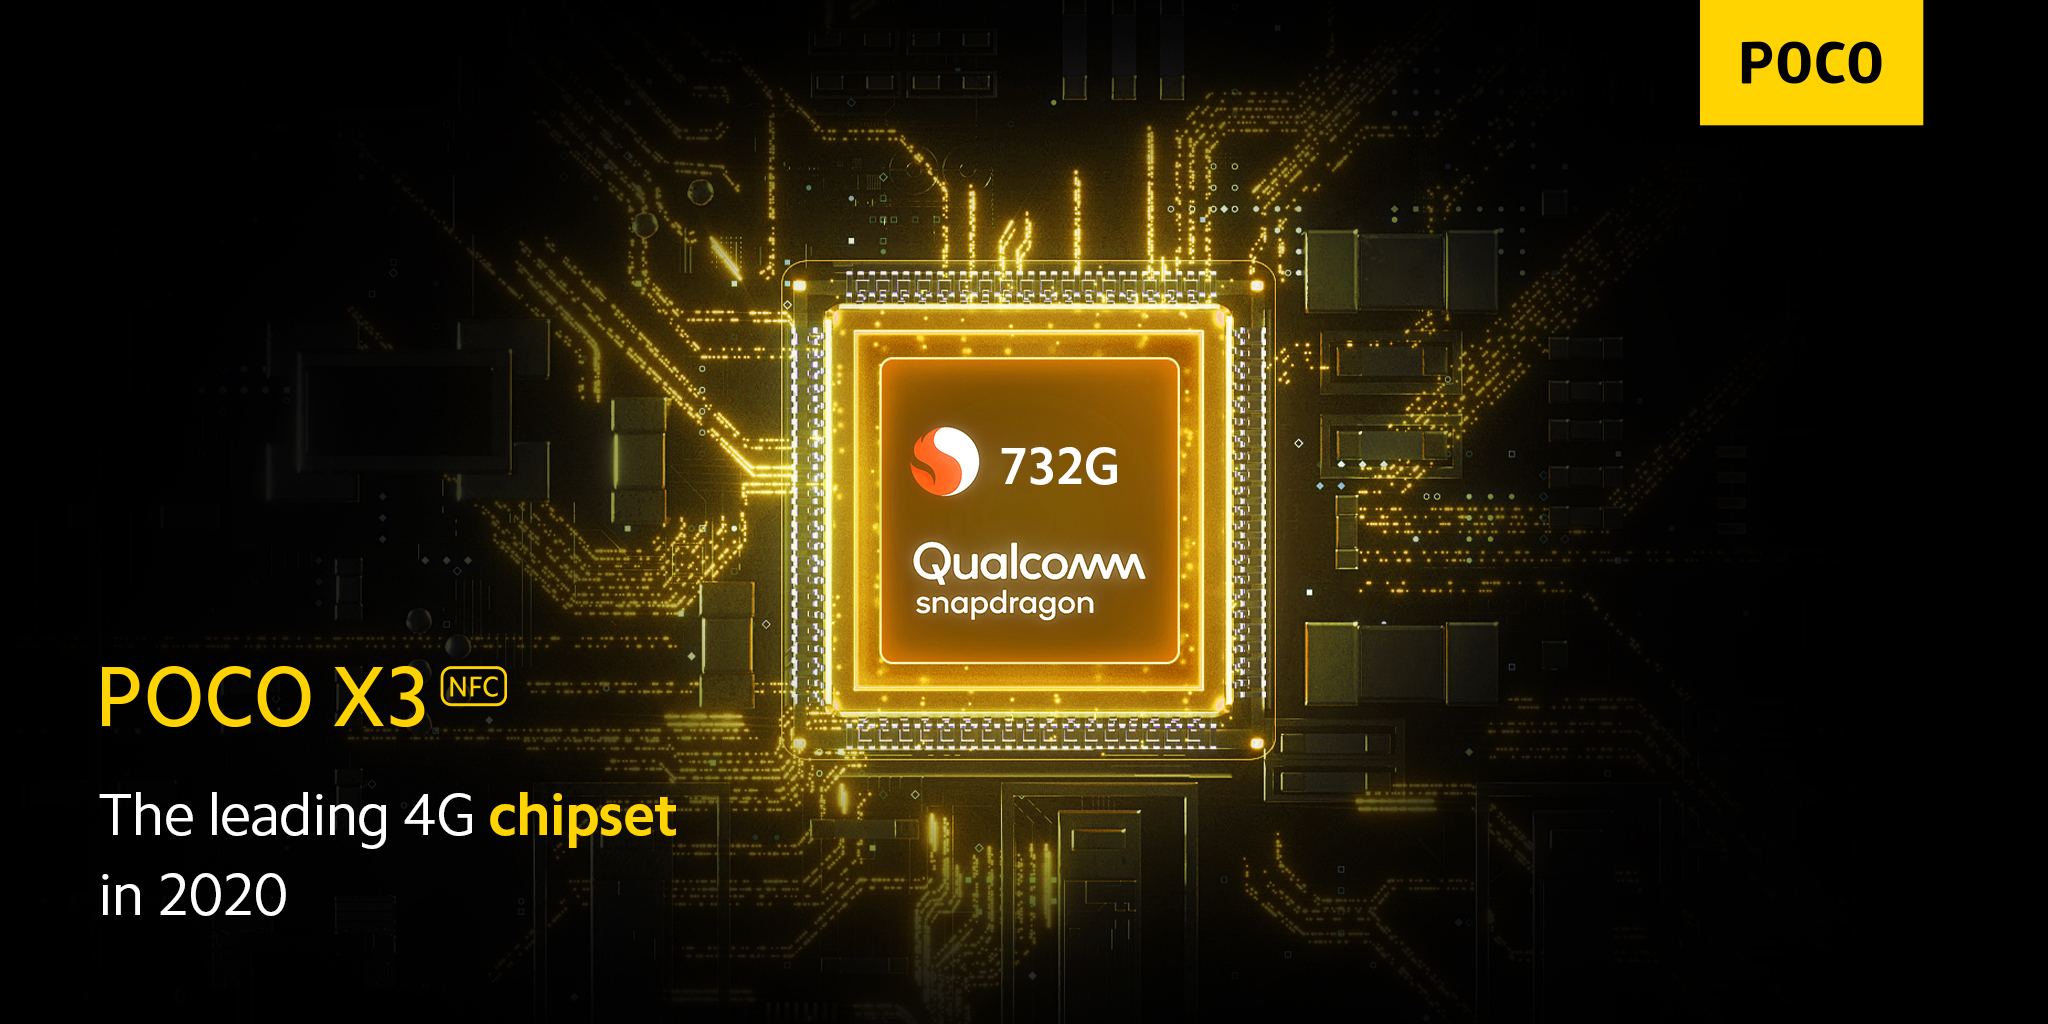 Процессор Snapdragon 732g. Qualcomm Snapdragon 732g процессор. Snapdragon 732g архитектура. Чип Snapdragon 732g.